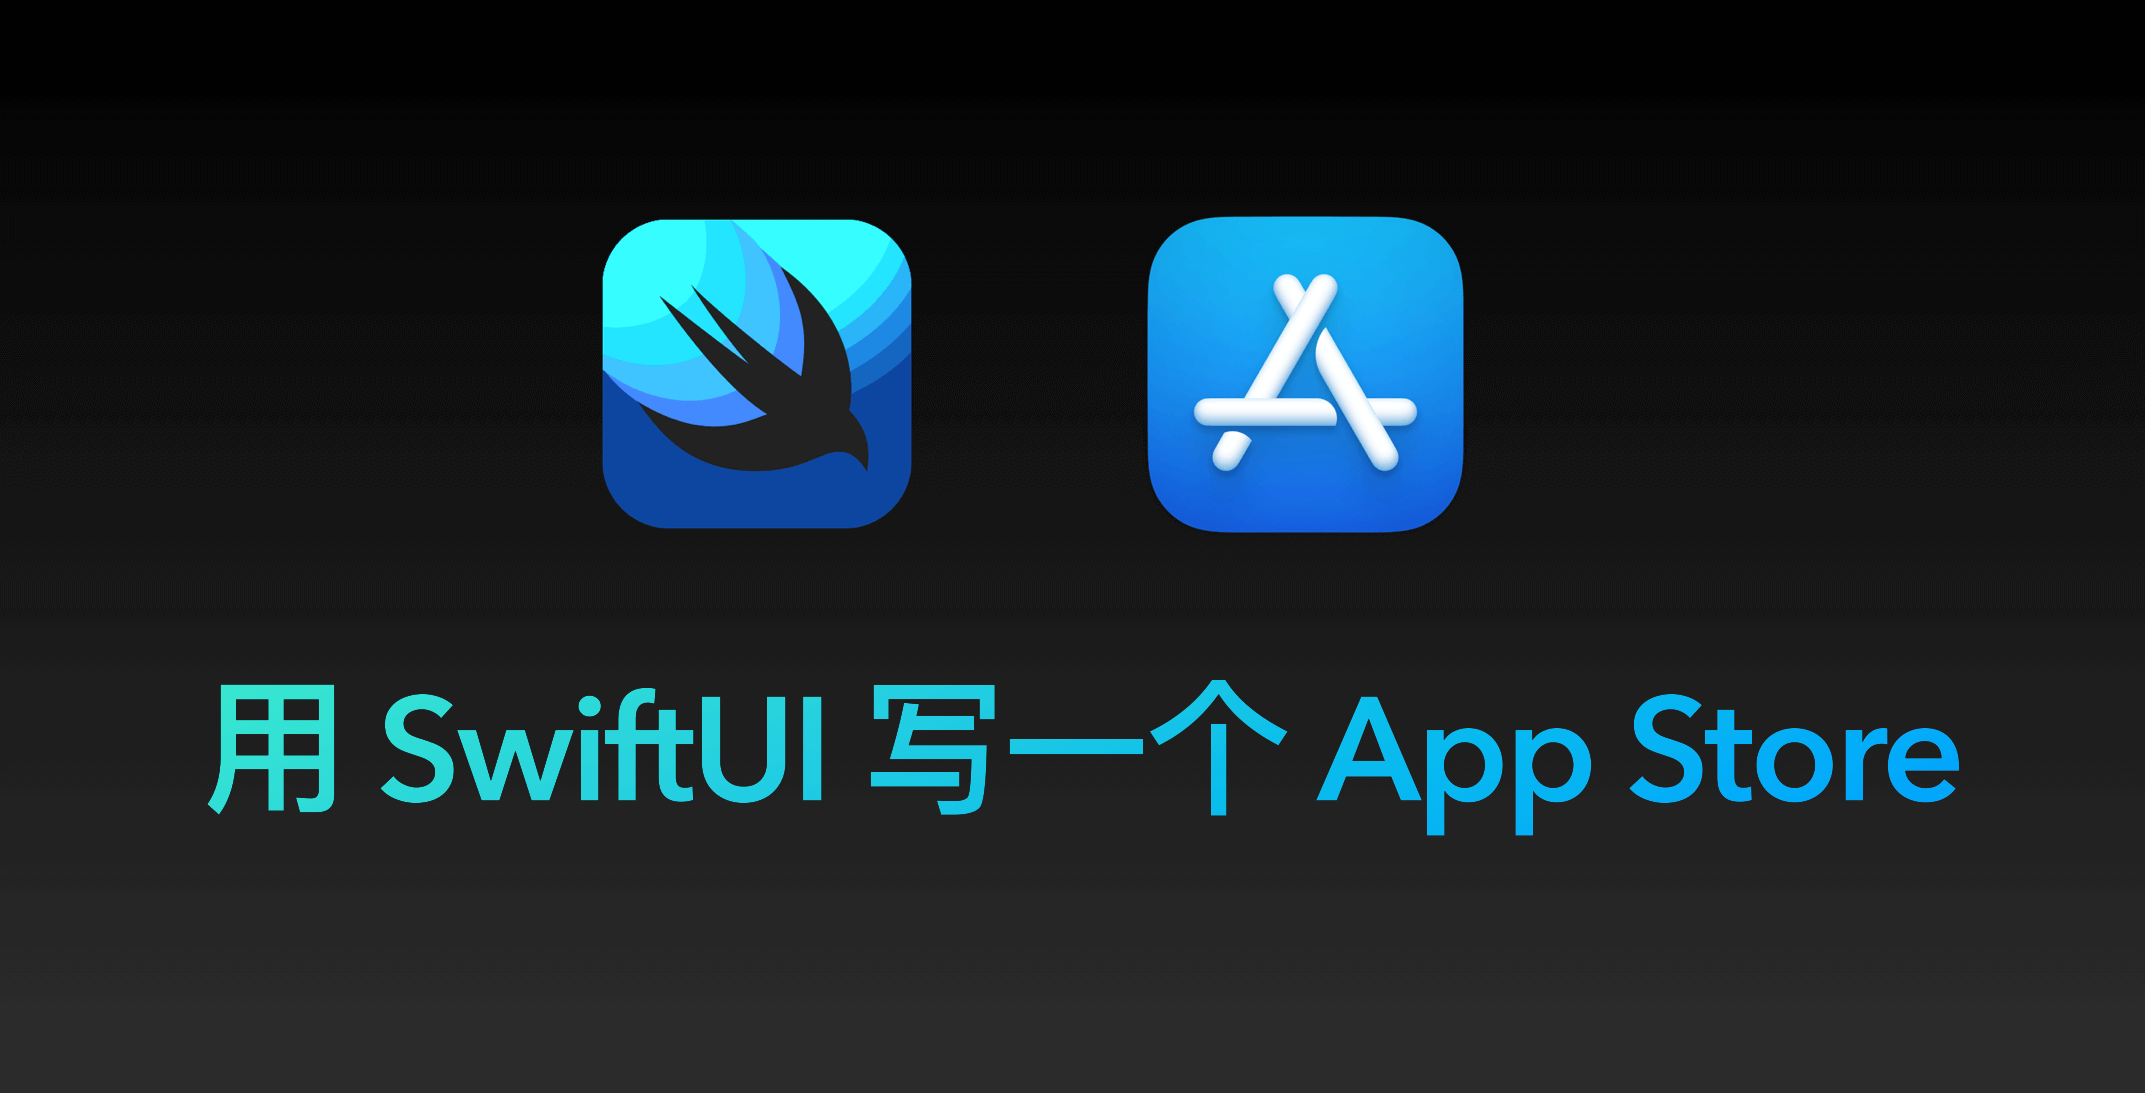 用 SwiftUI 实现一个开源的 App Store